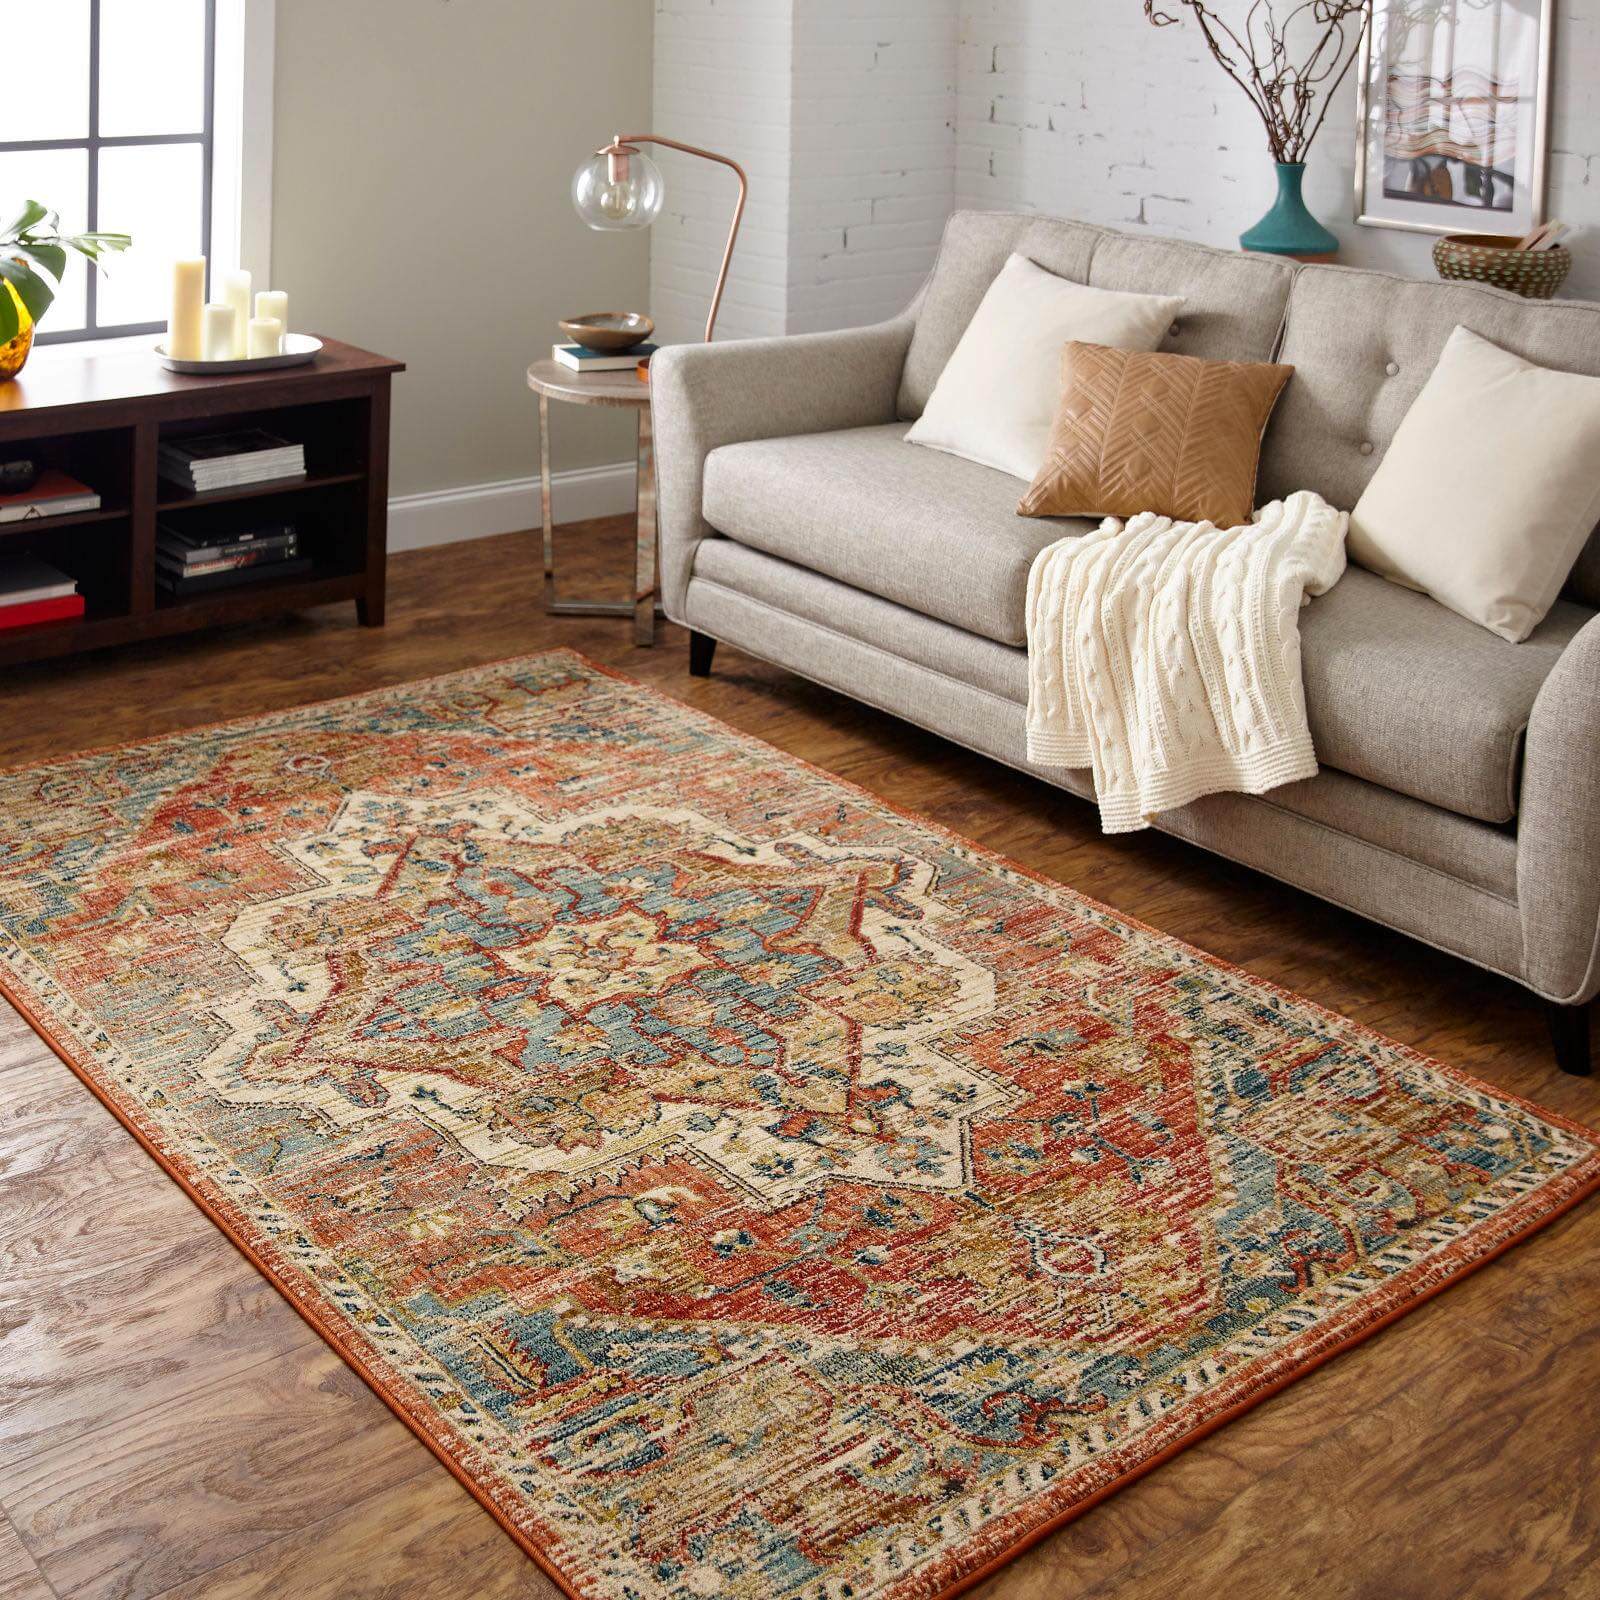 Area rug in living room | Floors Unlimited Of Nc LLC